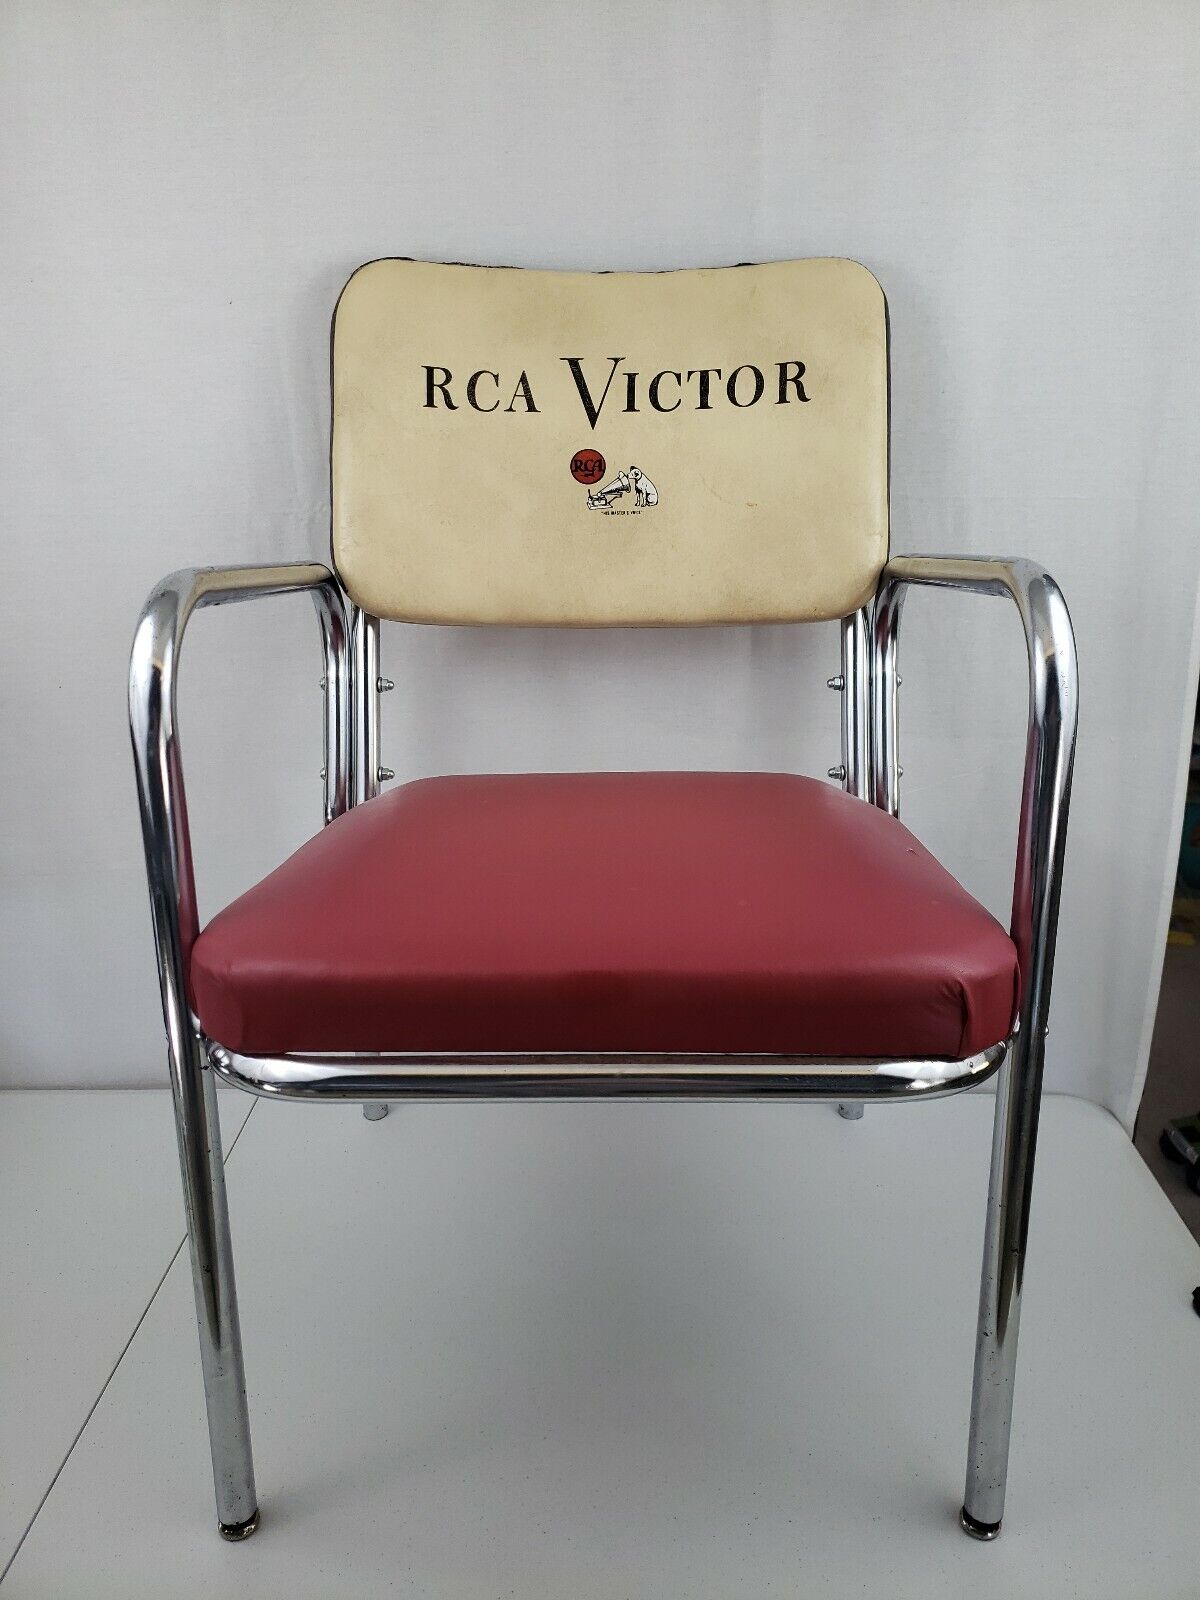 VTG 1950s RCA VICTOR STUDIO RED CUSHION CHAIR NIPPER DOG ADVERTISING CHROMCRAFT